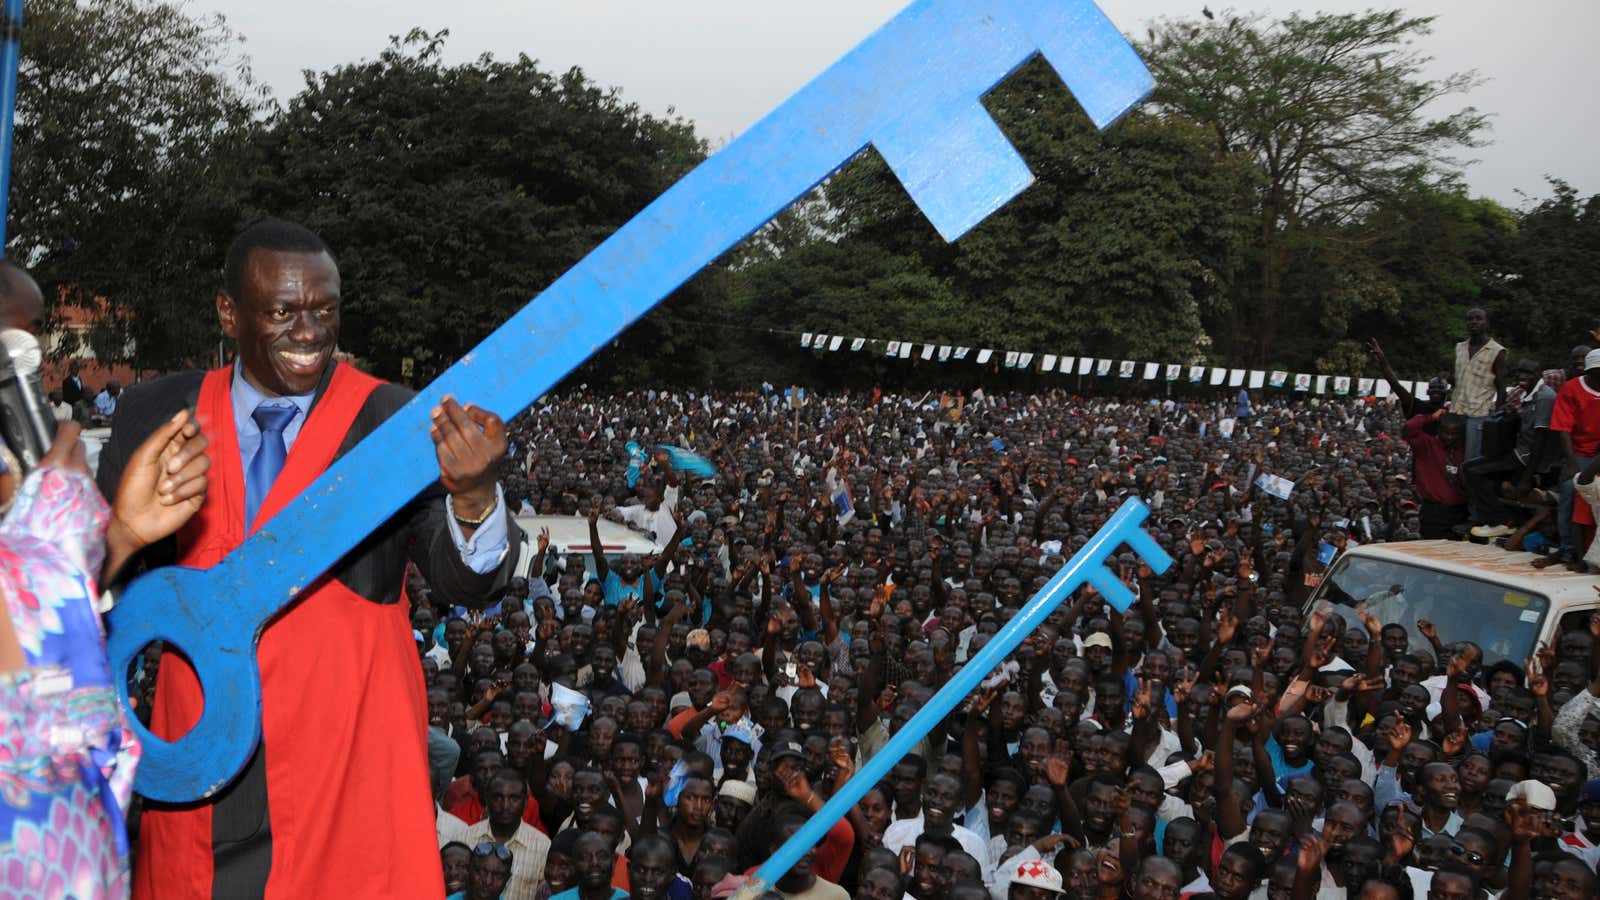 Kizza Besigye campaigning at Makerere University.